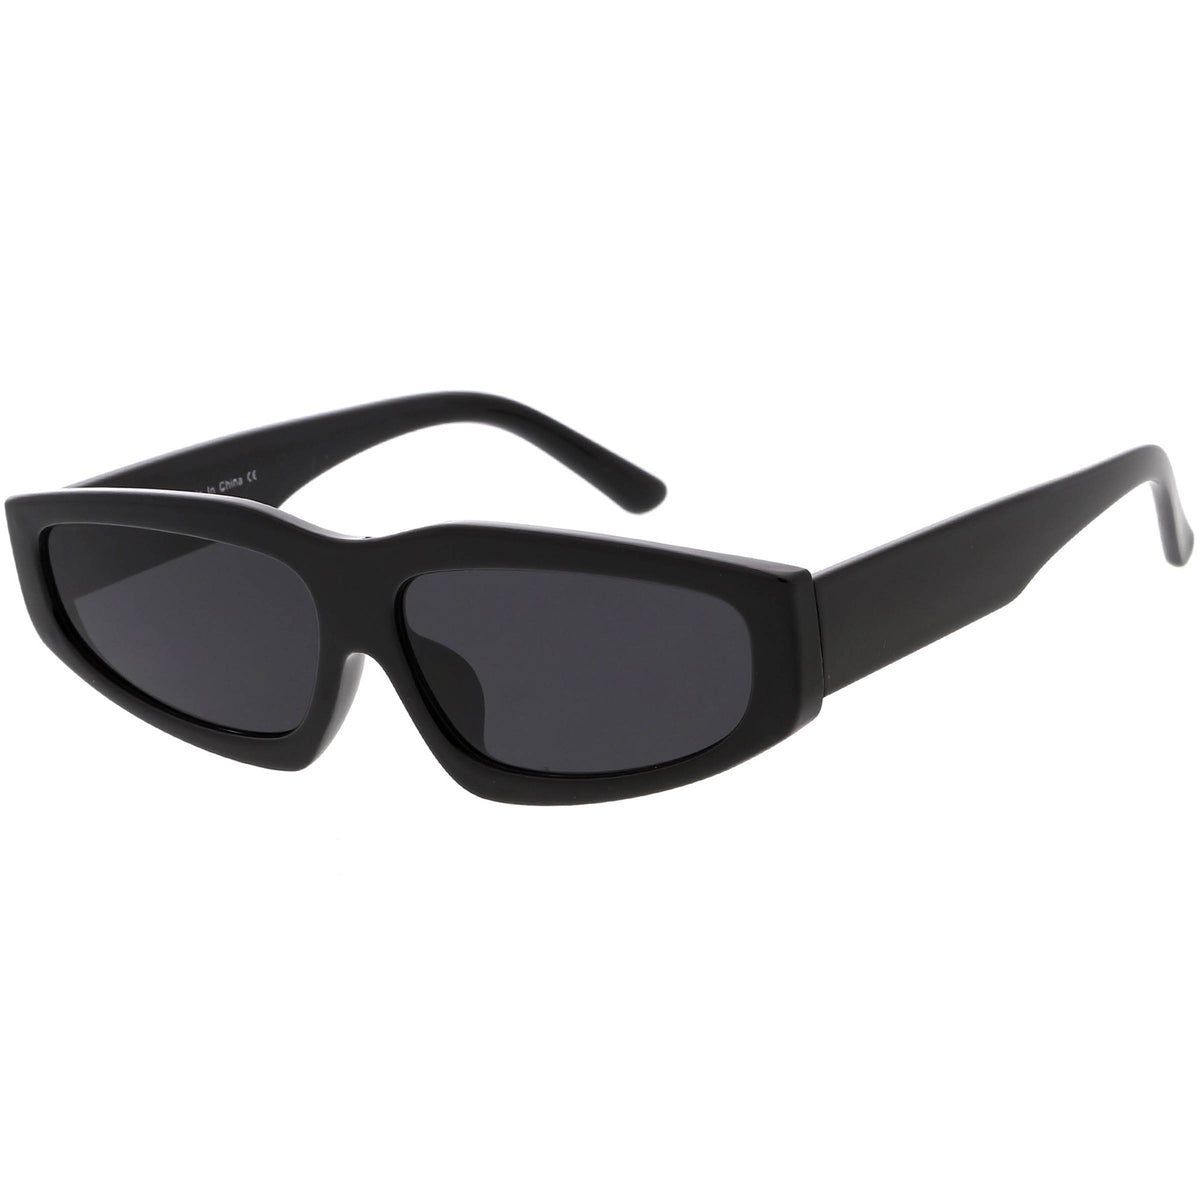 Retro Fashion 90s Style Thick Frame Plastic Rectangle Sunglasses 60mm Sunglassla 